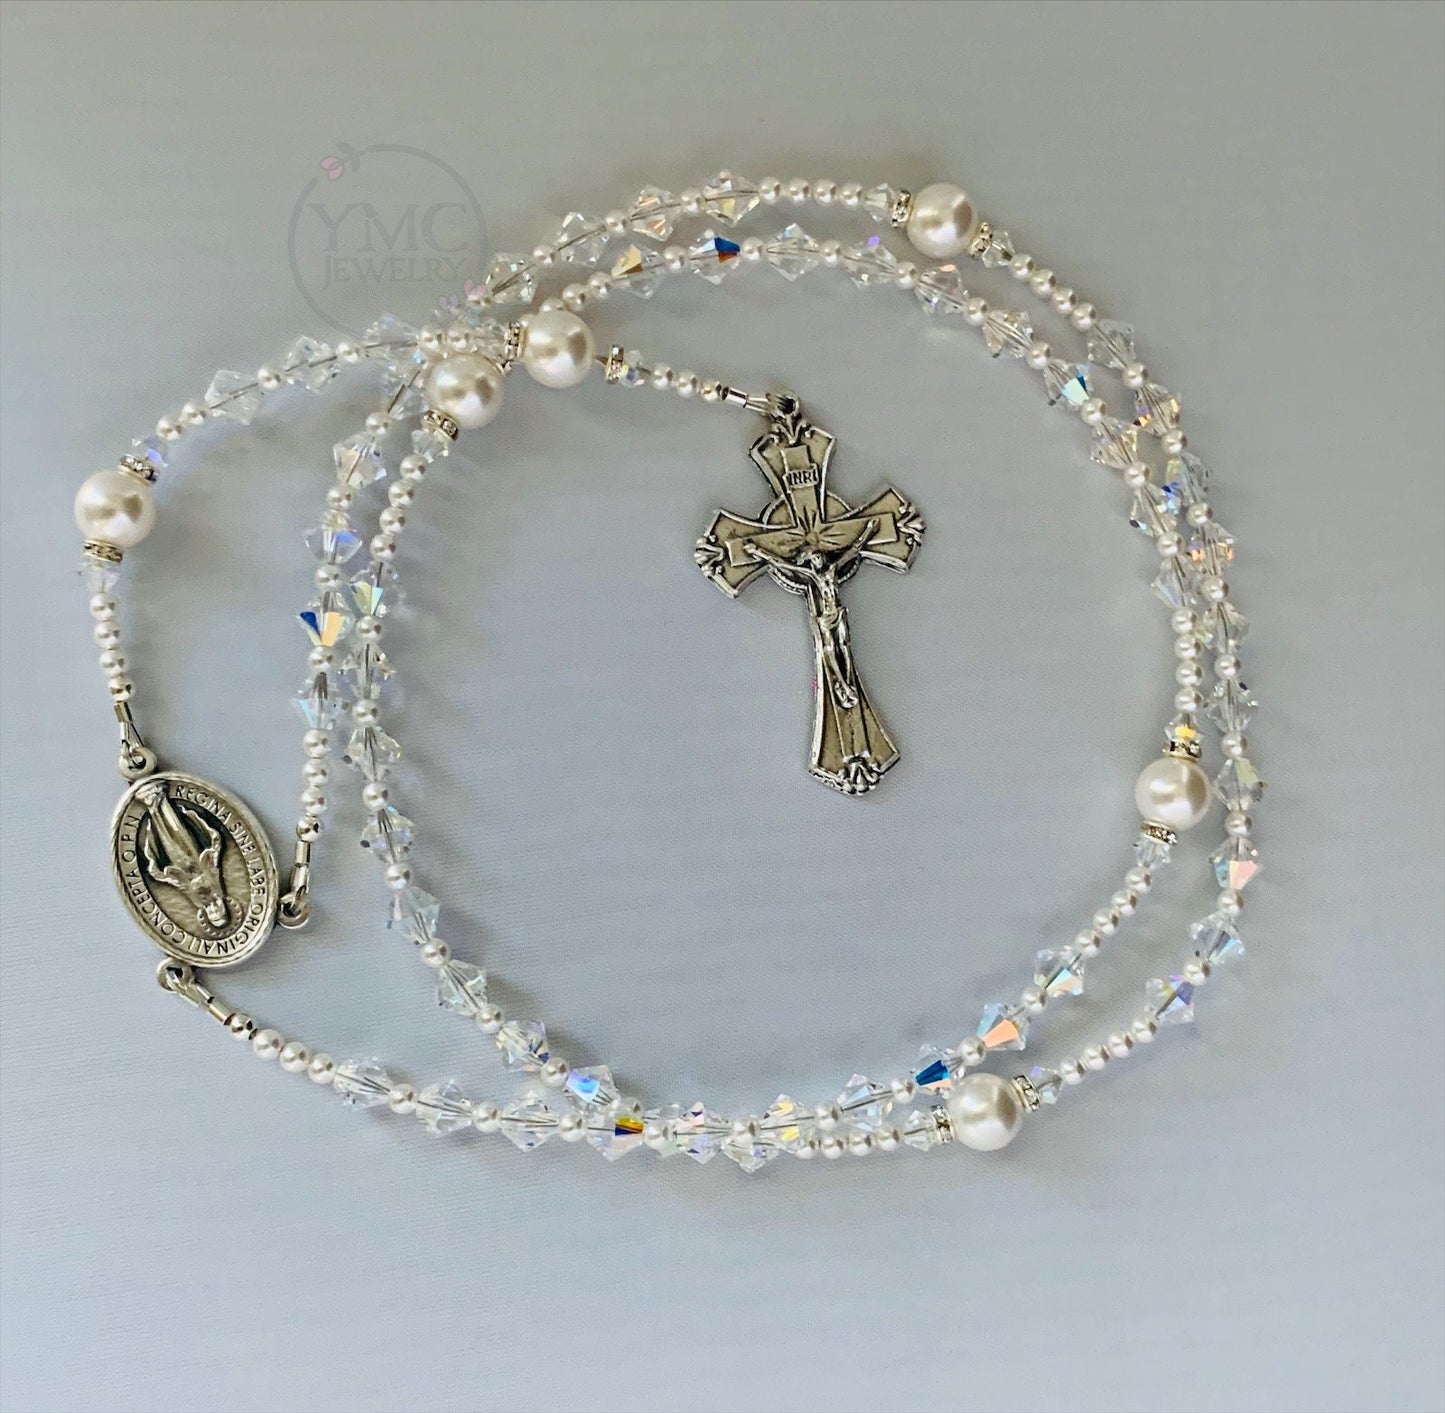 Catholic Bride Pearl Rosary,Five Decade Pearl Rosary,Confirmation Rosary,Wedding Bride Bridal Pearl Rosary,First Communion Rosary,Bride Gift